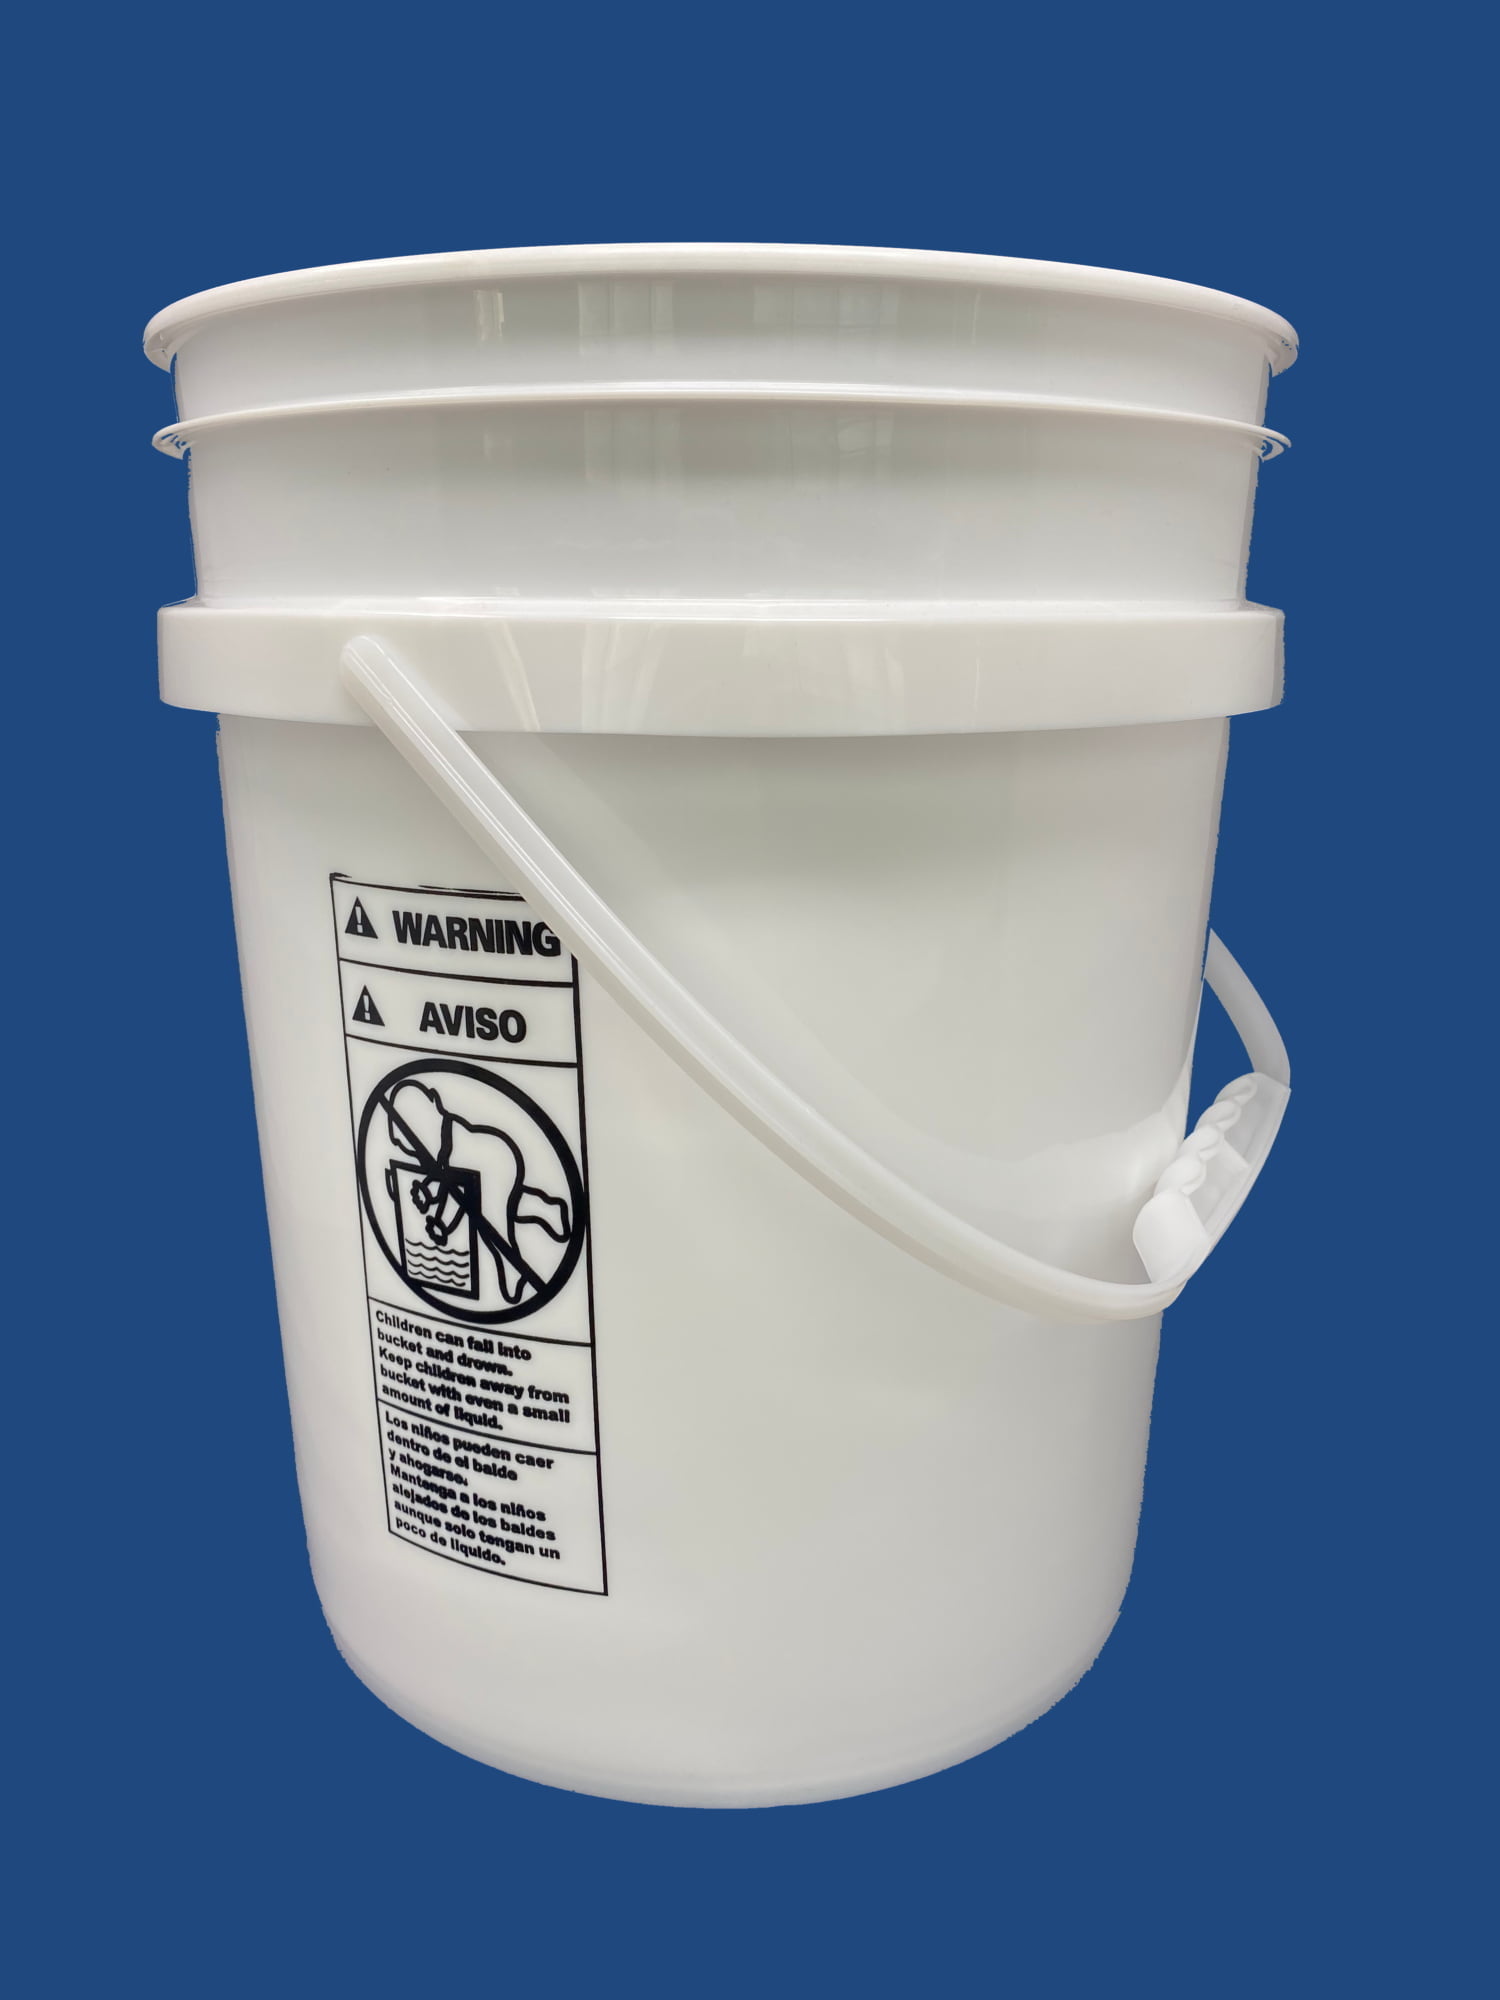 Paragon Manufacturing Plastic Bucket Manufacturer